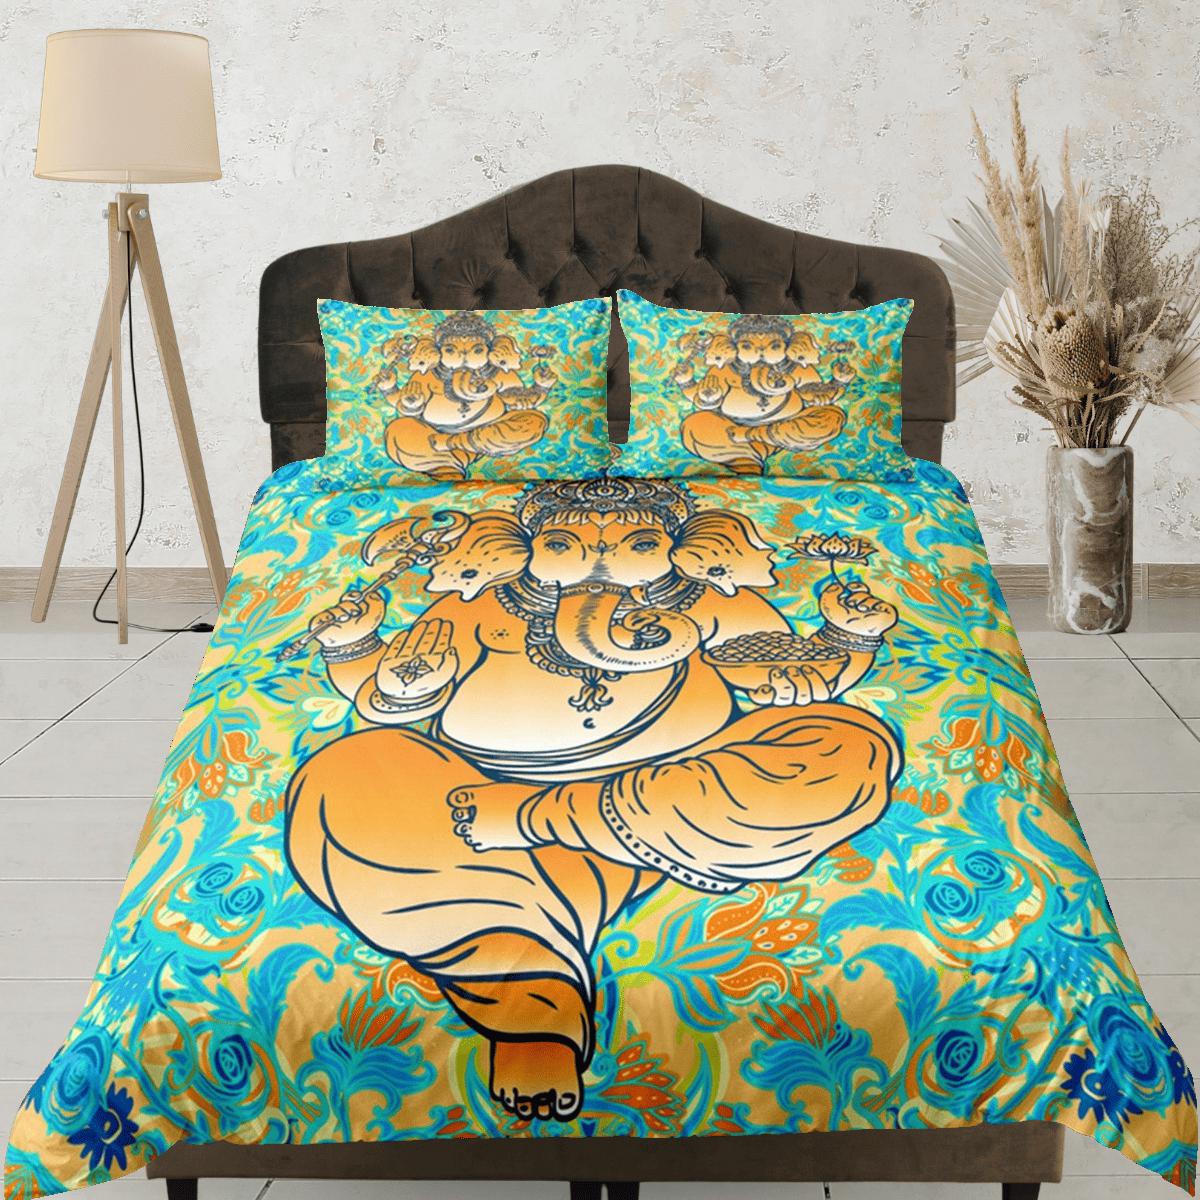 daintyduvet Ganesha Green Duvet Cover Set Indian Decor, Bedspread Elephant Gift Bedding Comforter Cover Bedding